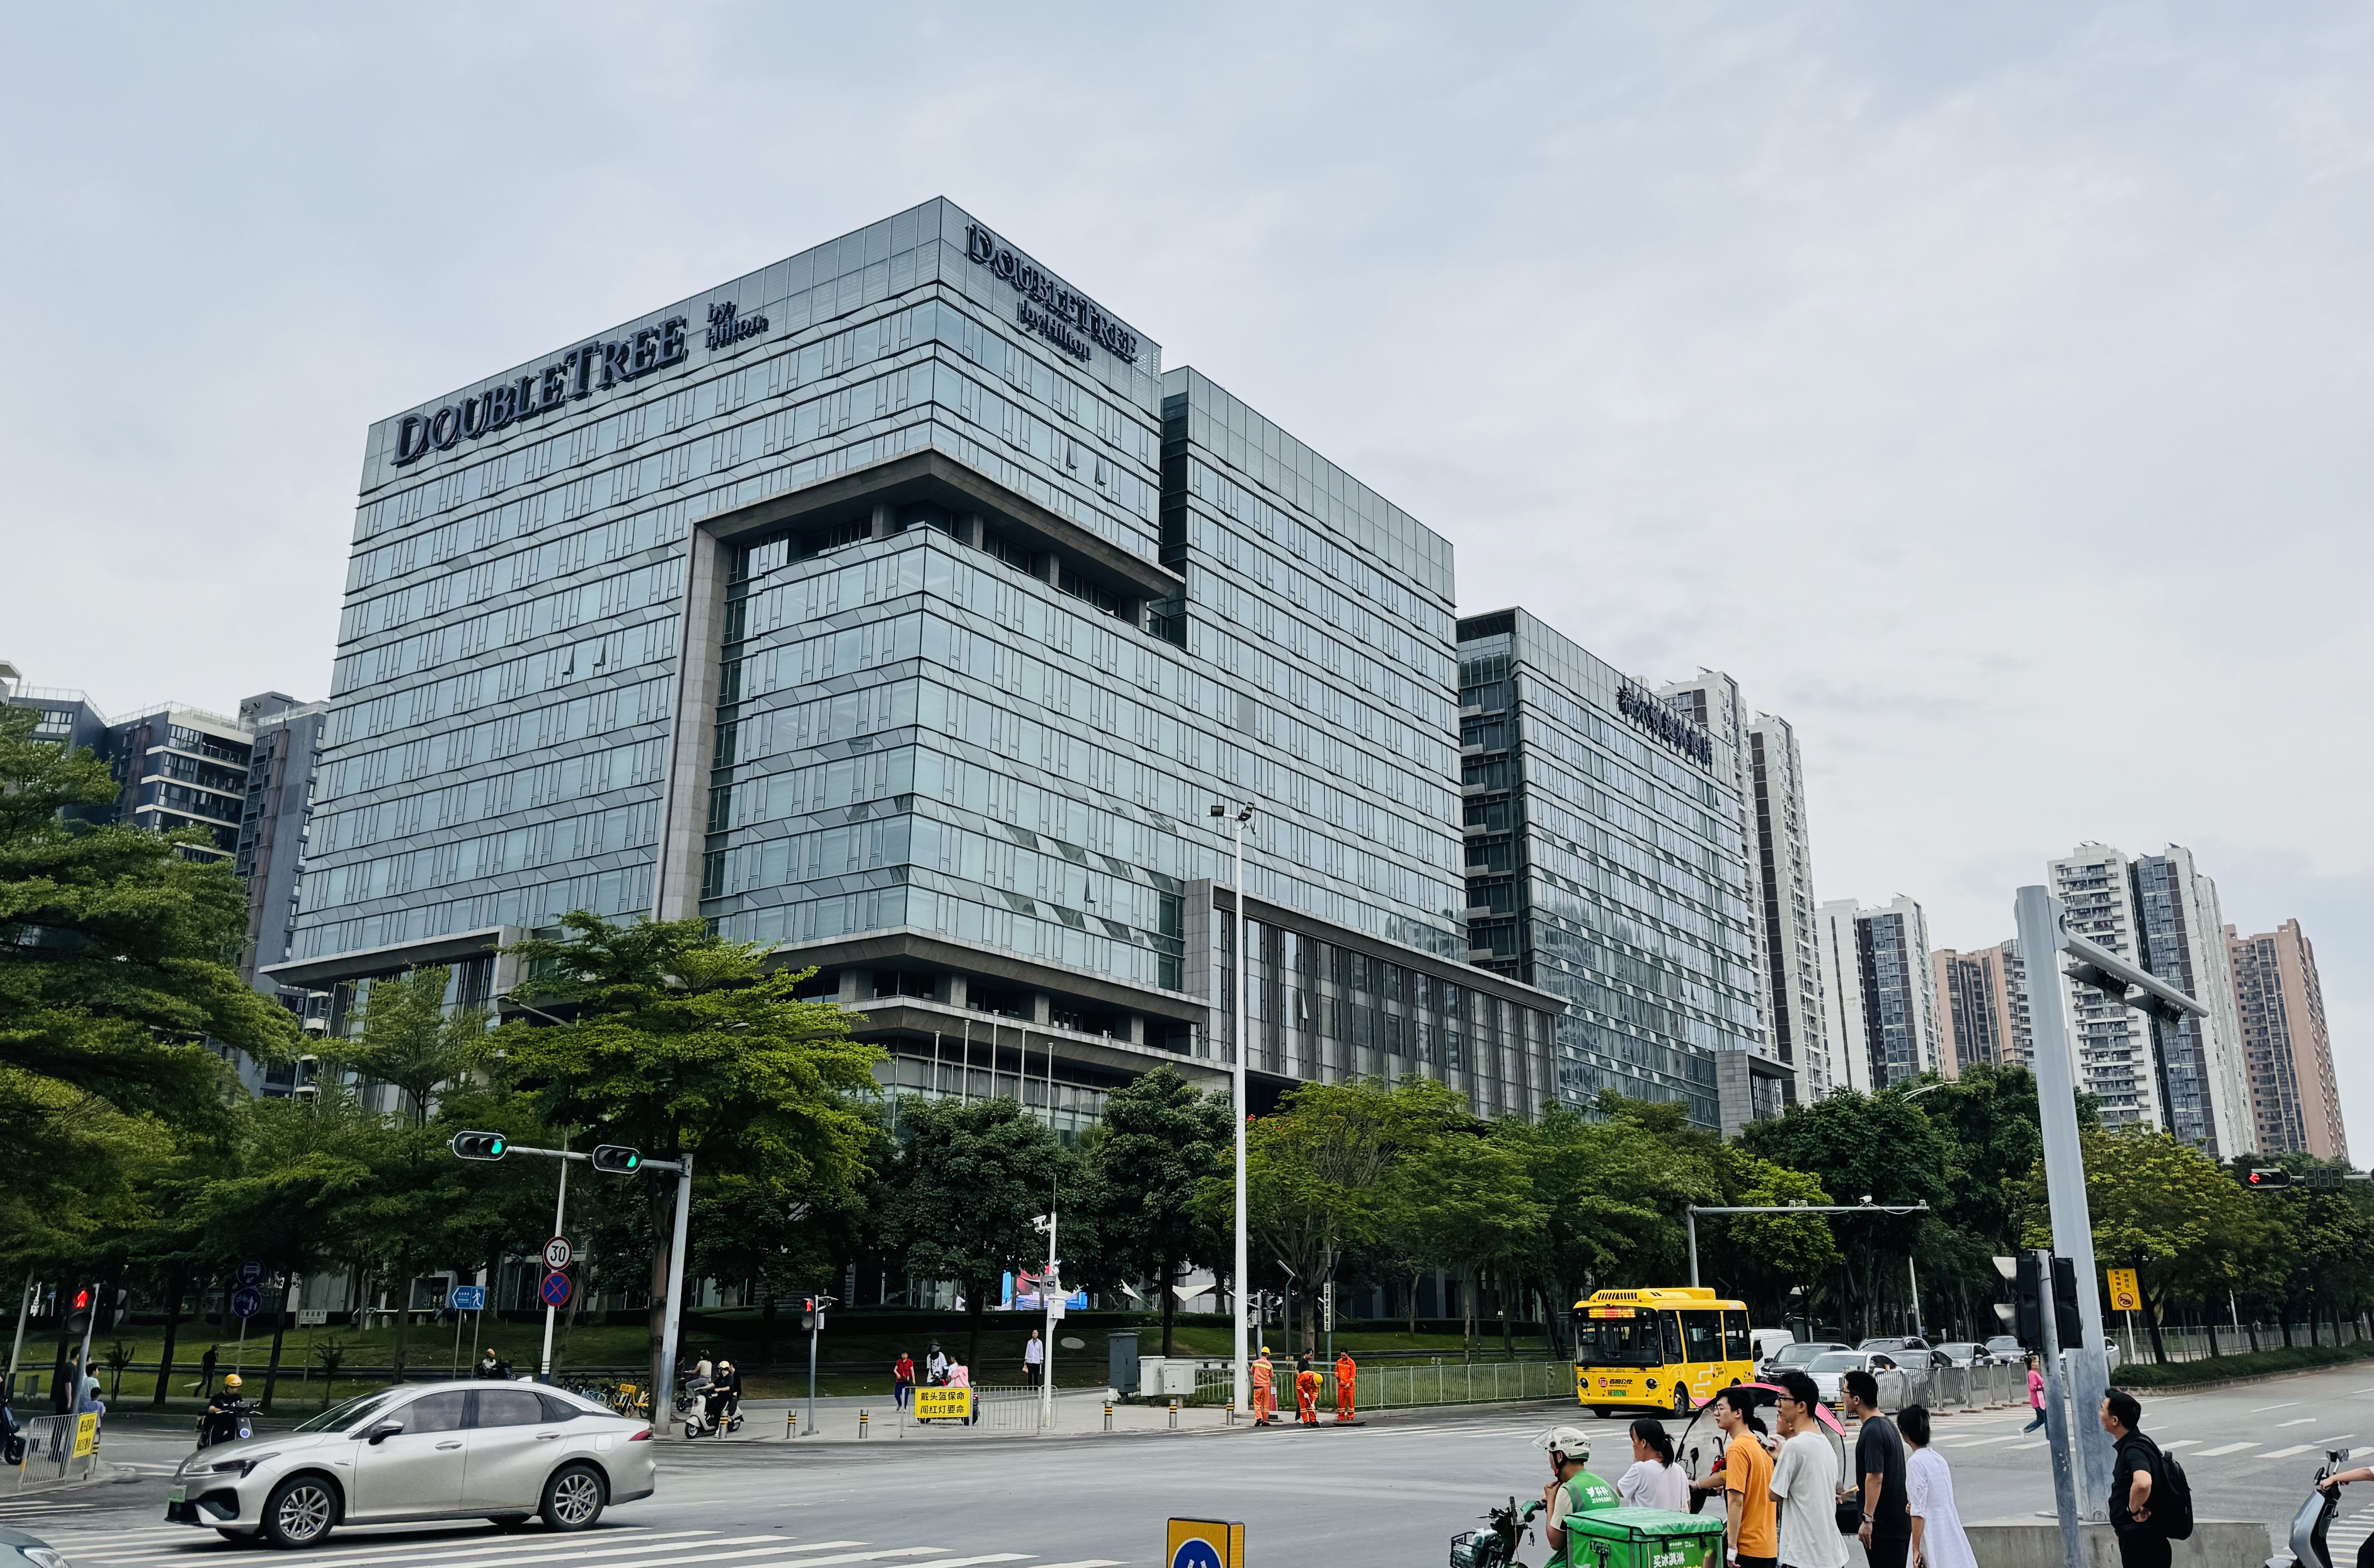 #öó#Ѻ|DoubleTree by Hilton Shenzhen Airport Residences